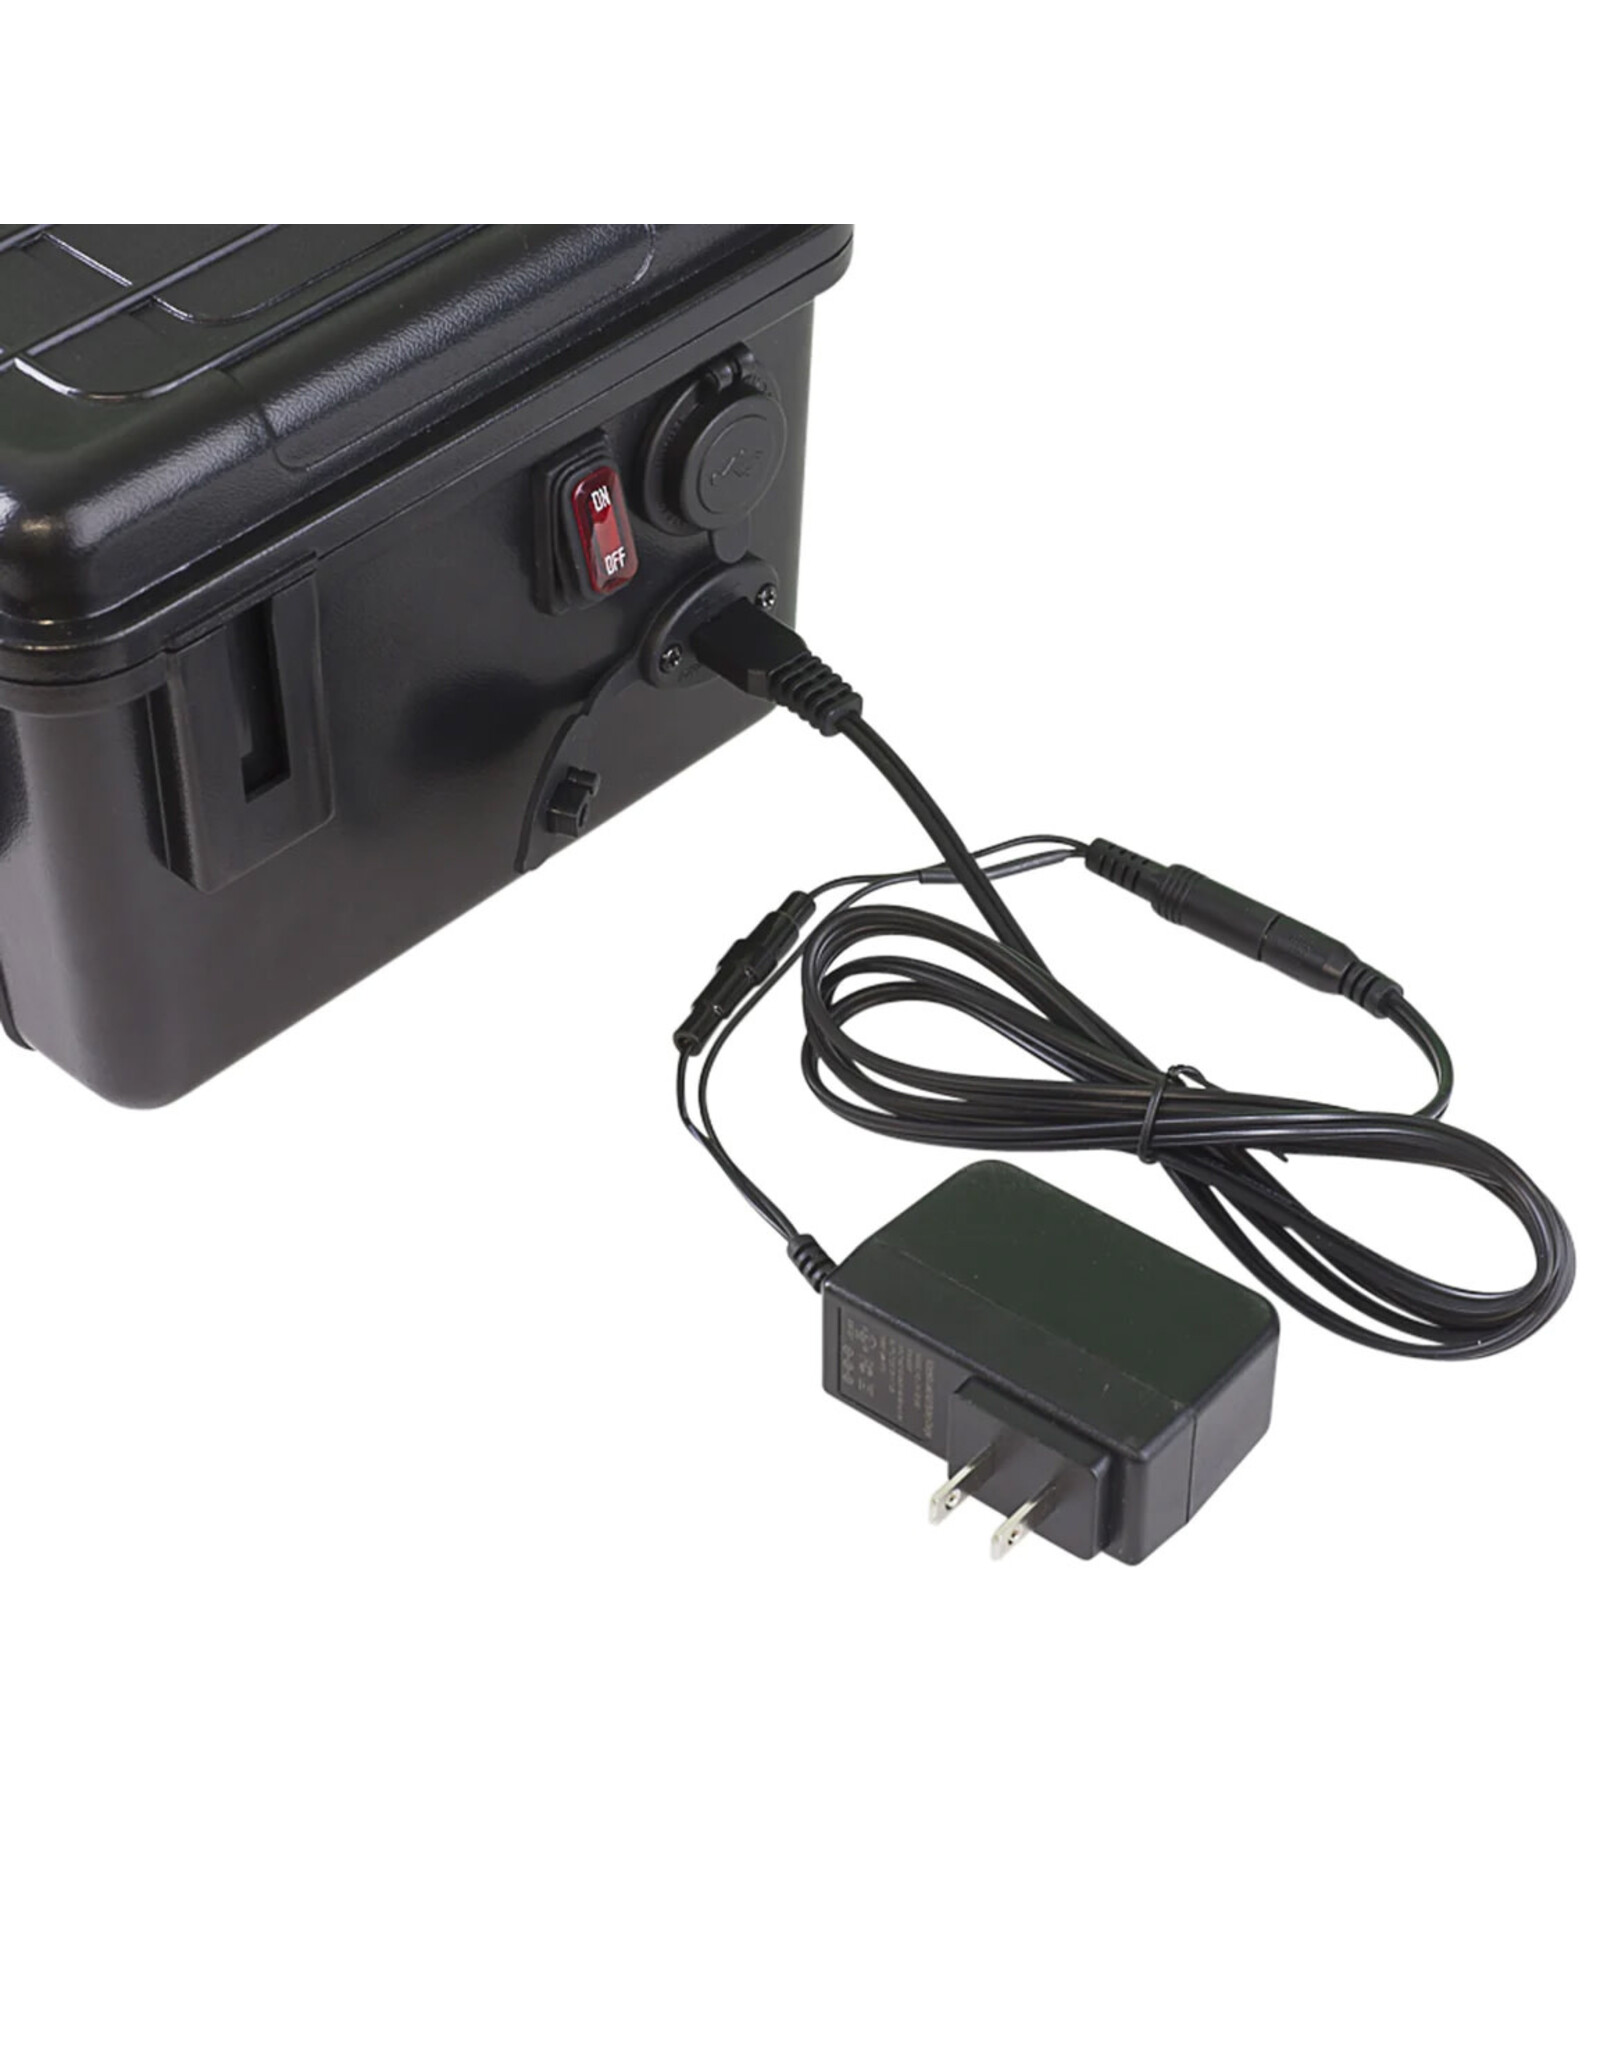 Yak-Power Yak-Power Power Pack battery box w/ integrated USB charging